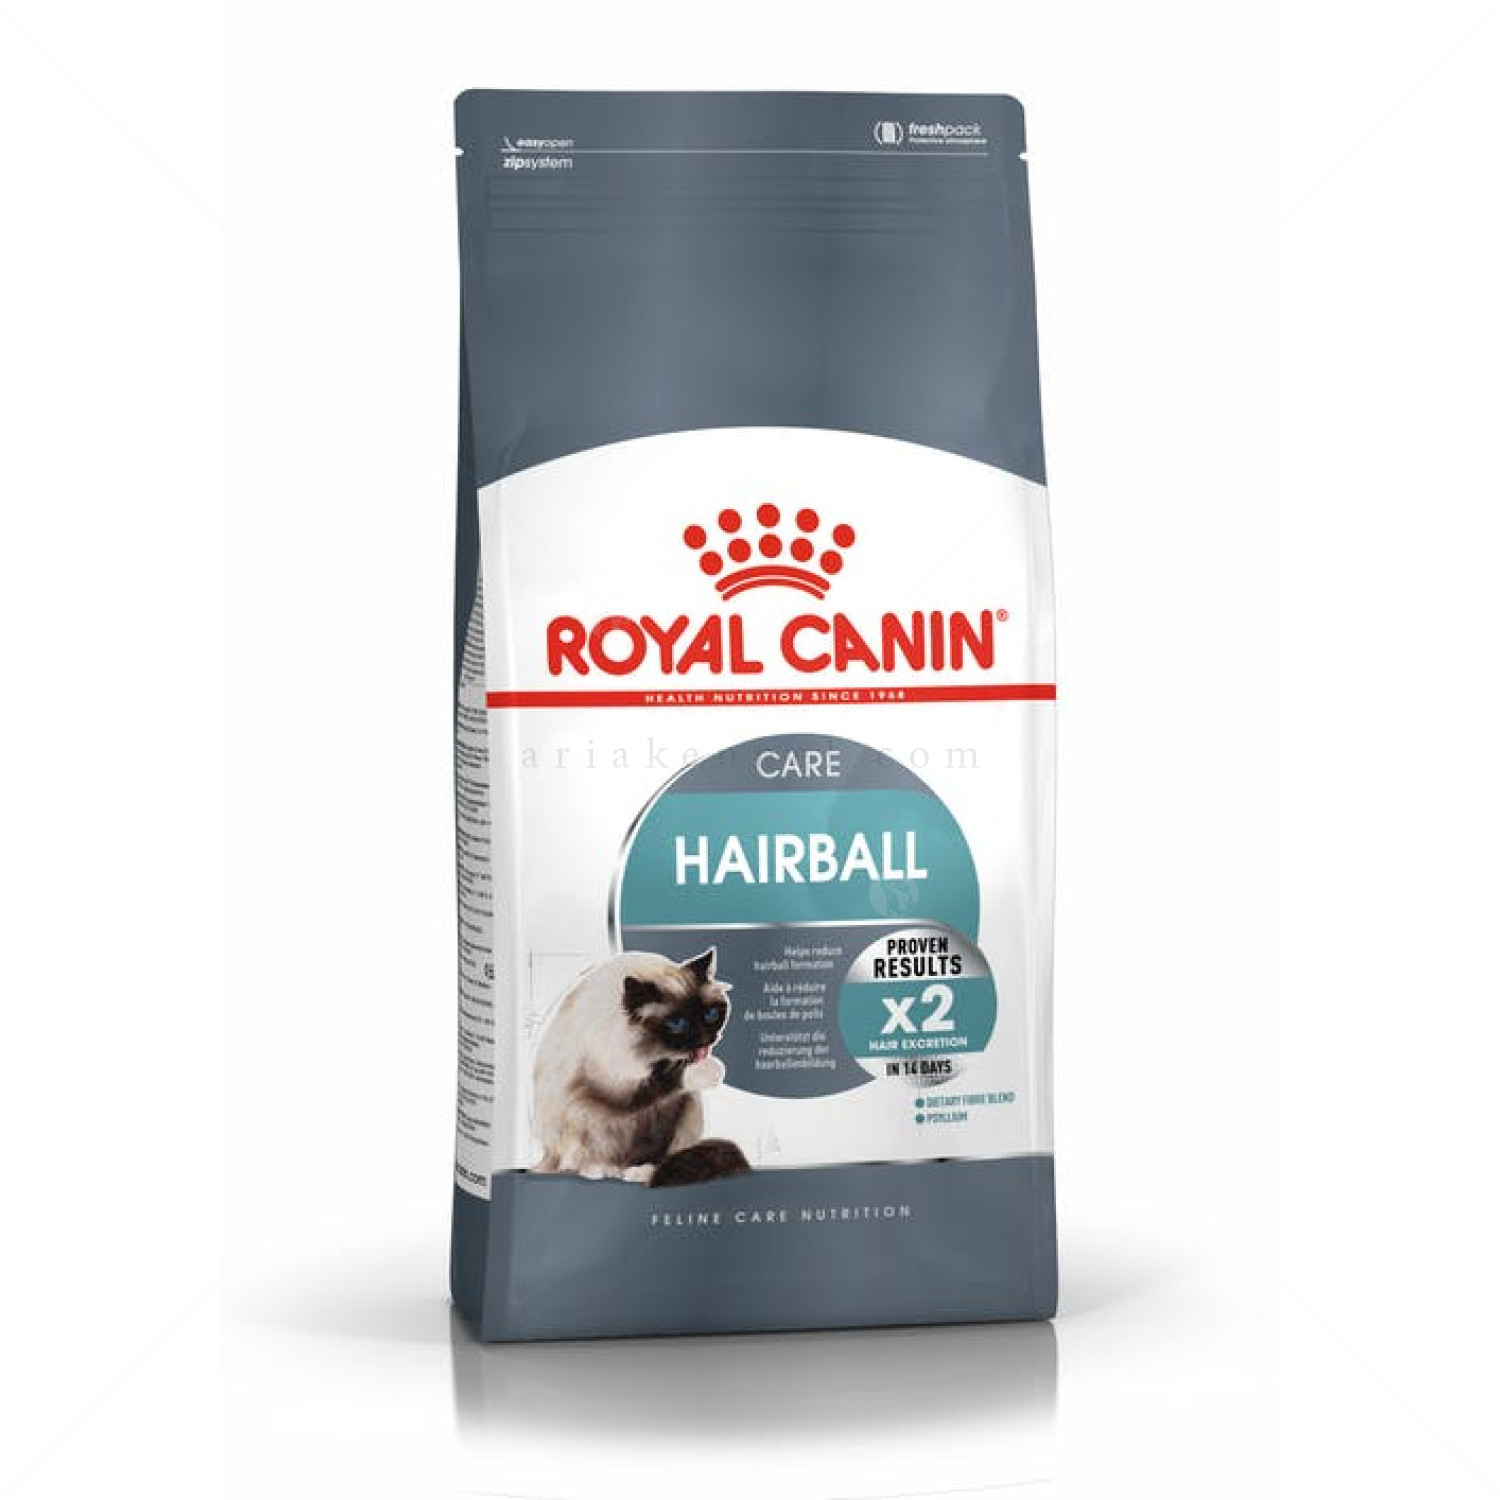 ROYAL CANIN 2 кг. Hairball Care